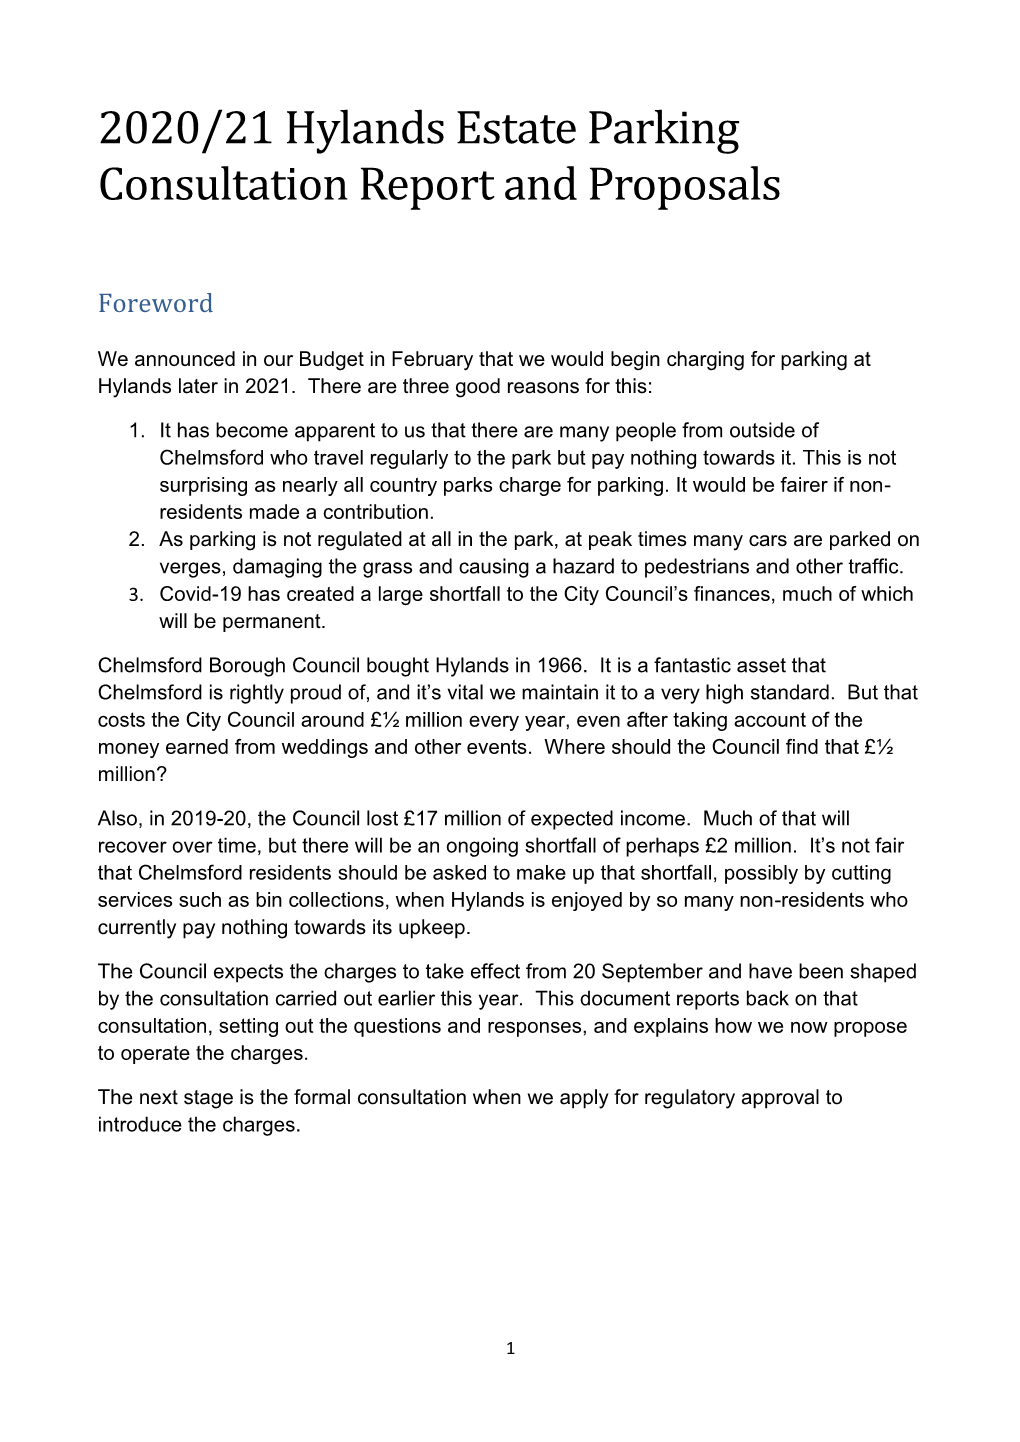 2020/21 Hylands Estate Parking Consultation Report and Proposals